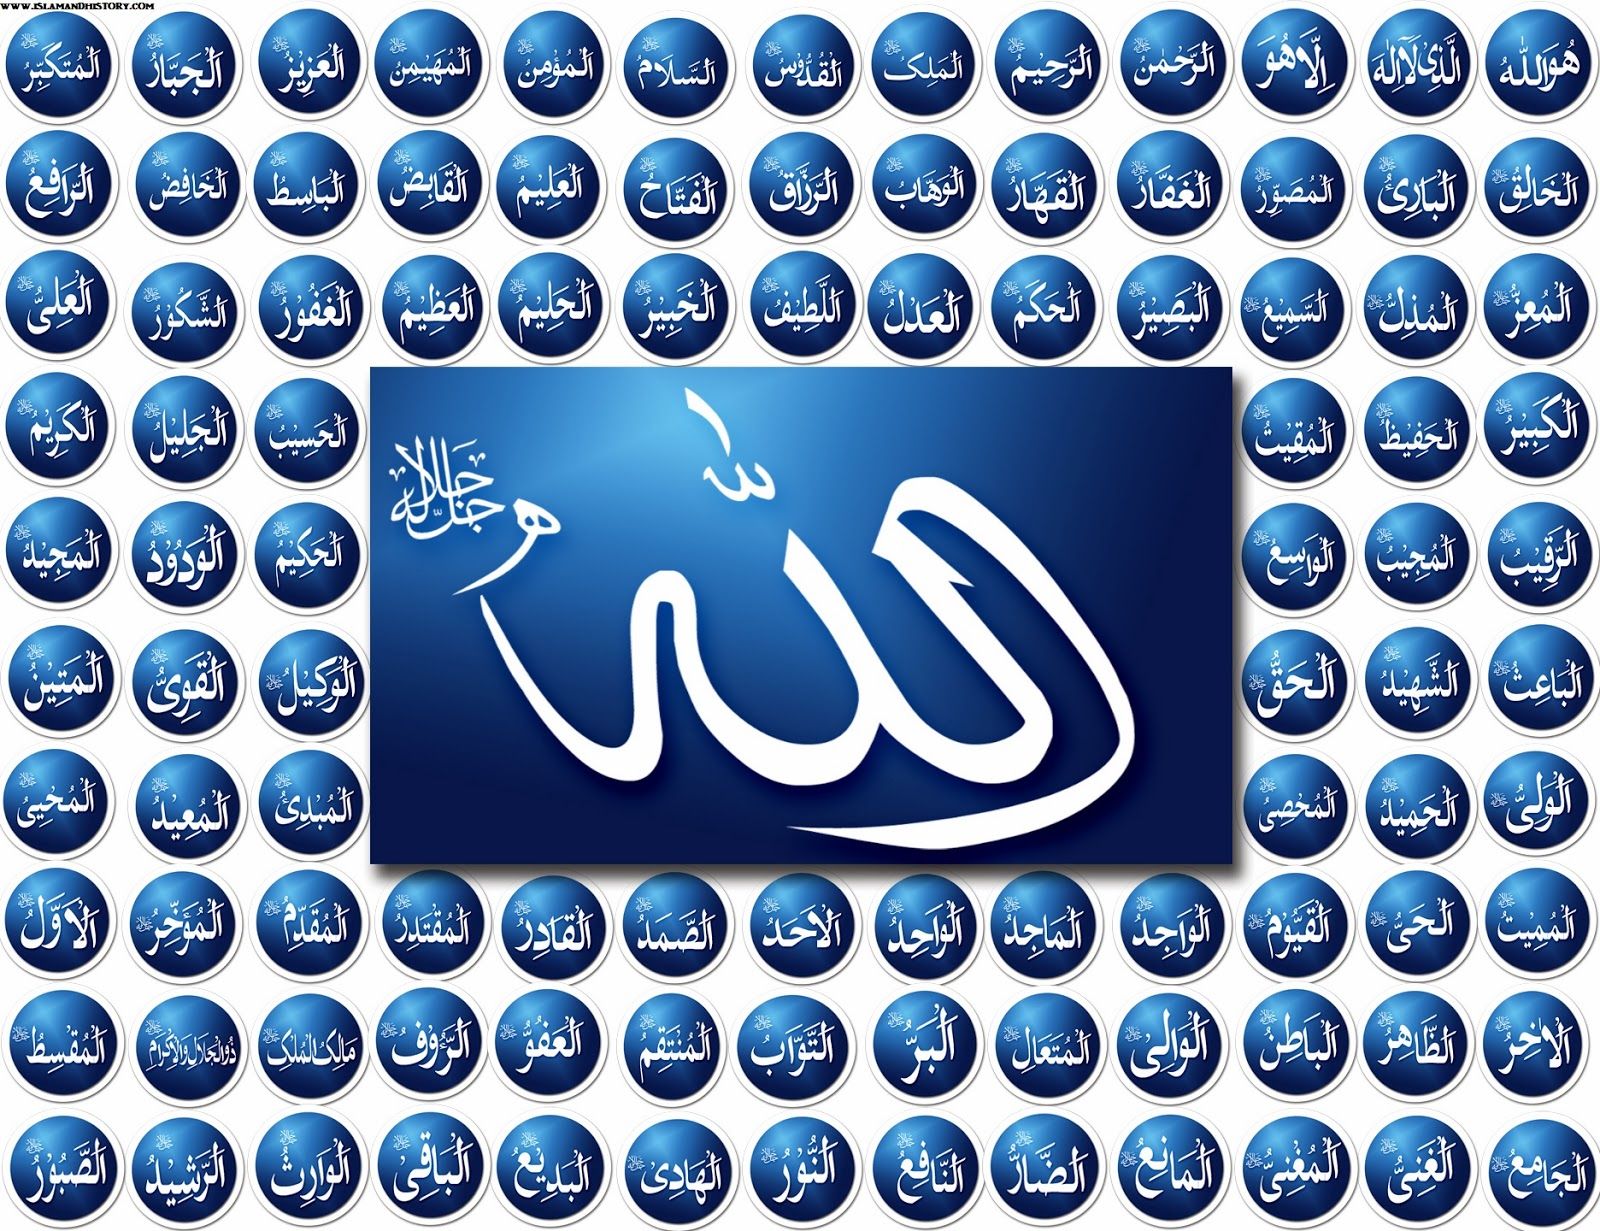 Allah Name Wallpaper HD Pic